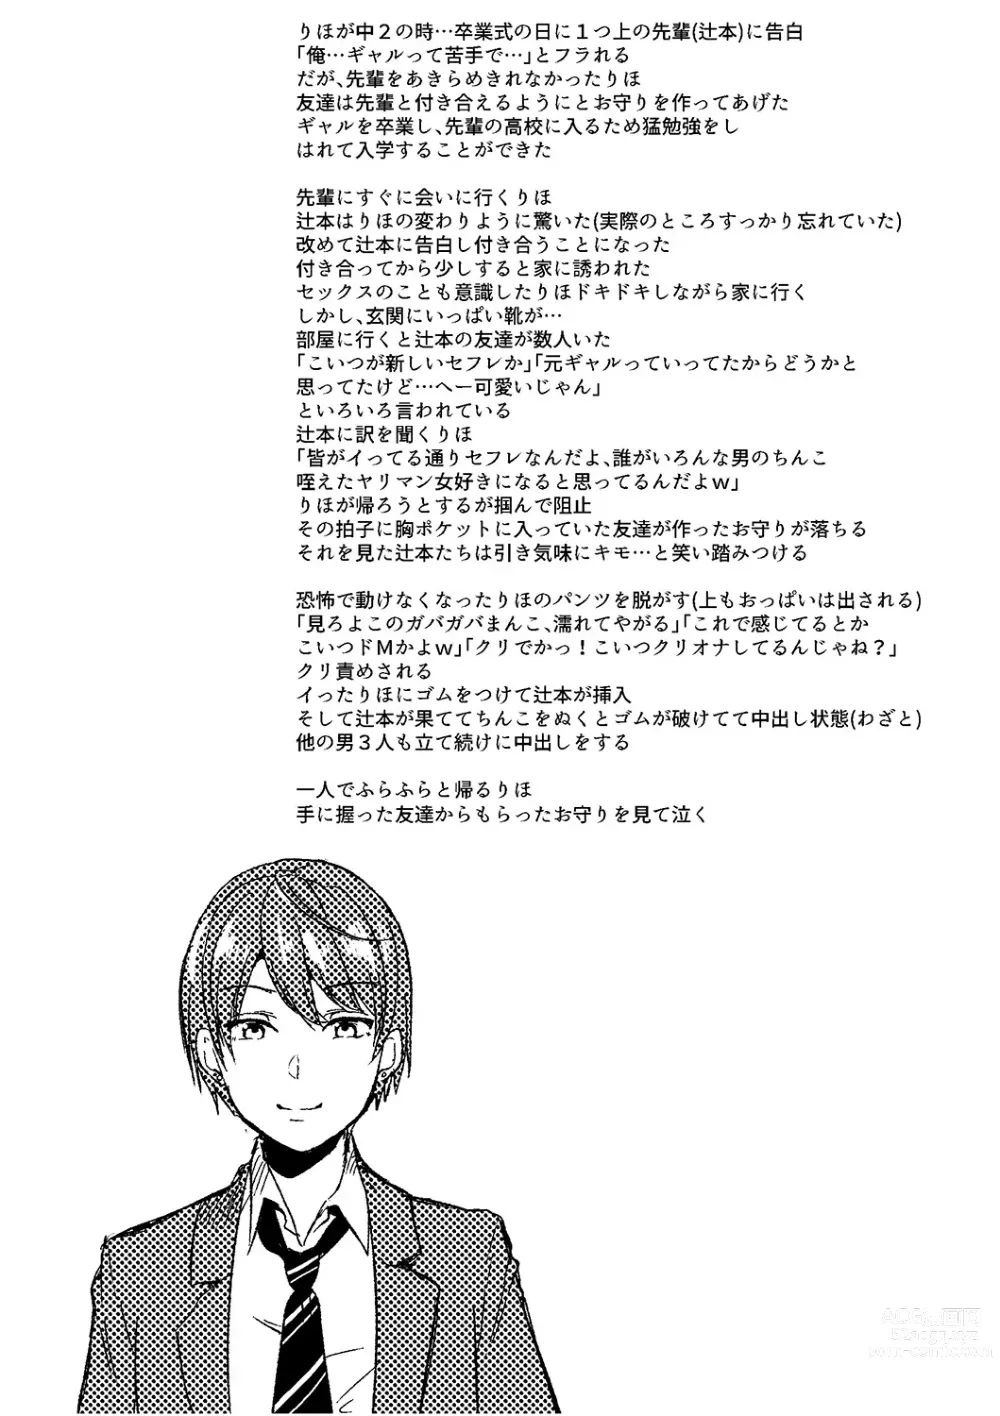 Page 205 of manga Kowashite Asobo + DLsite Gentei Chara Settei & Plot